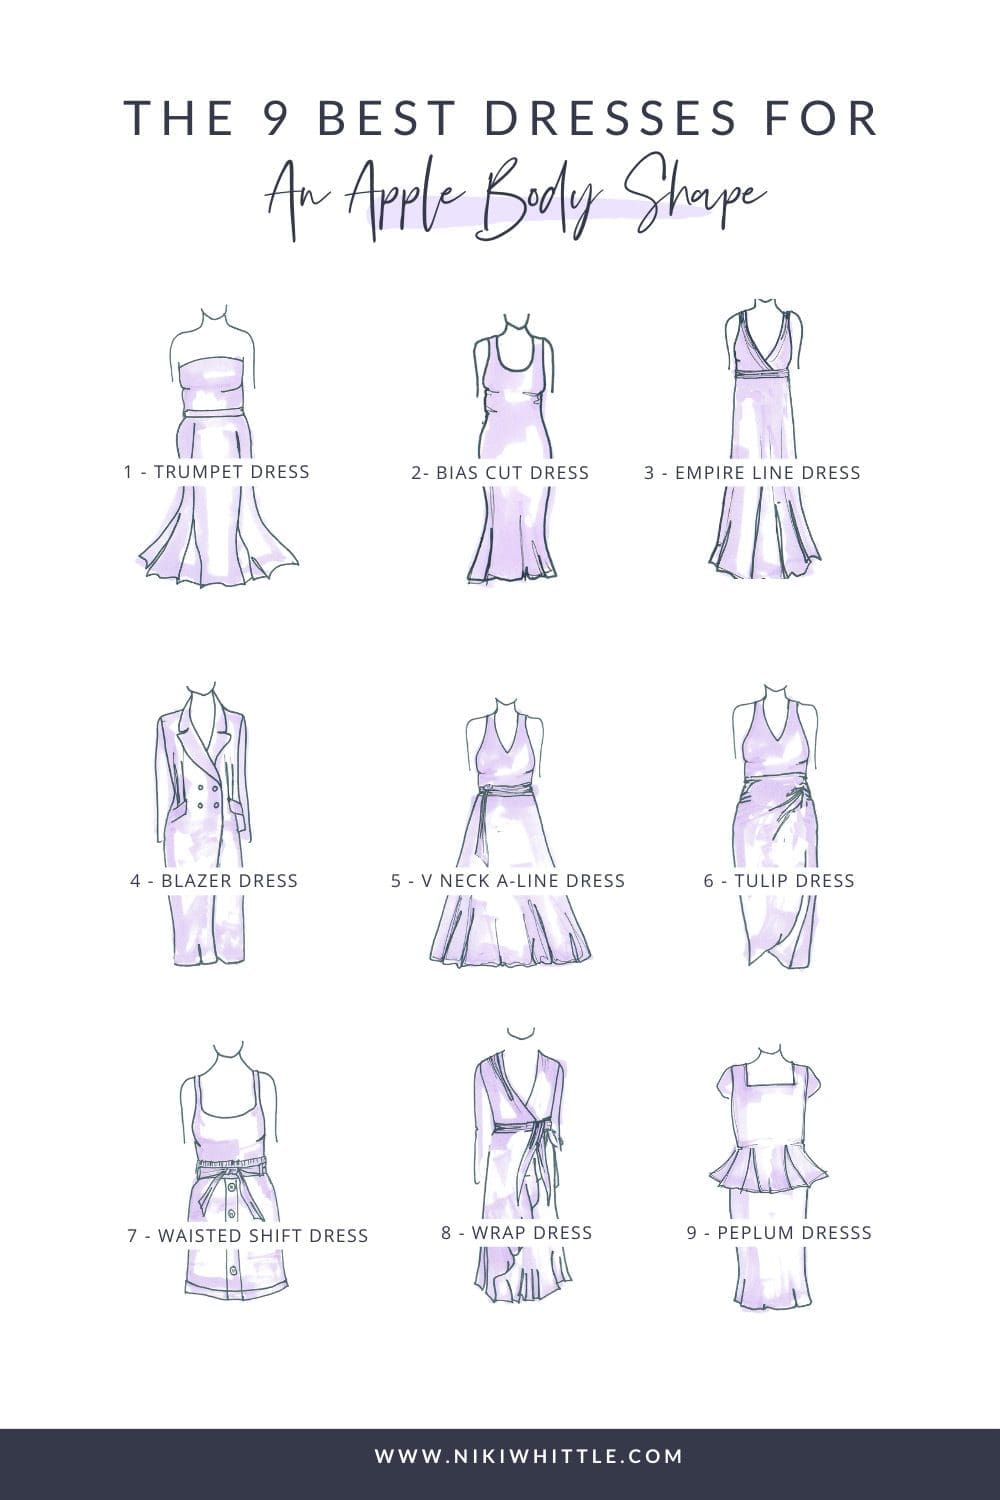 16 Best Ways to Dress Petite Plus Size - Petite Dressing  Petite dresses,  Dresses for apple shape, Plus size fashion tips